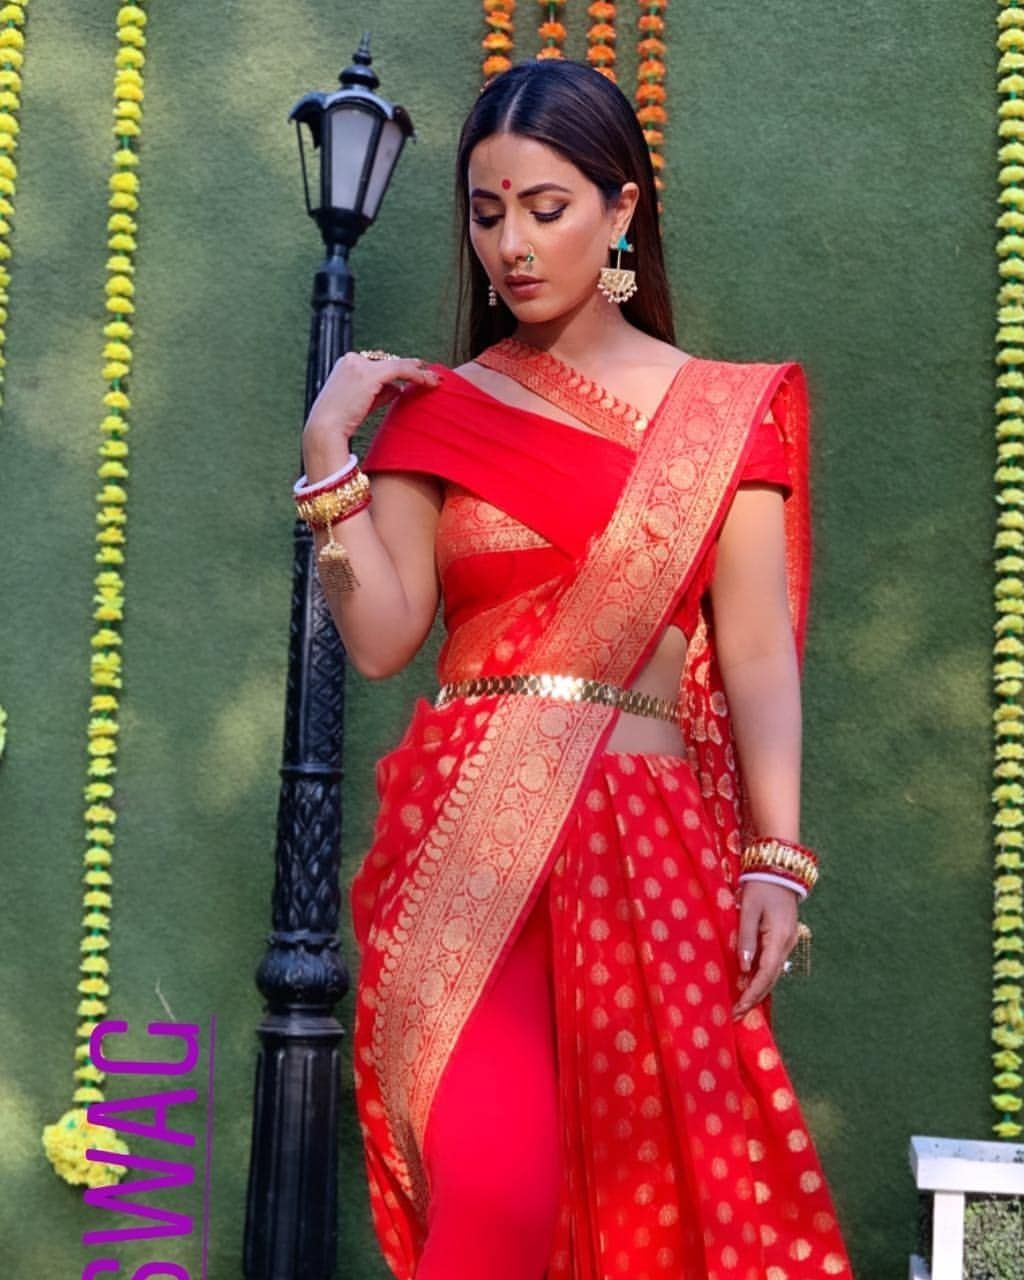 Hina Khan, Jennifer Winget, Erica Fernandes: Hot In RED Traditional Saree 4